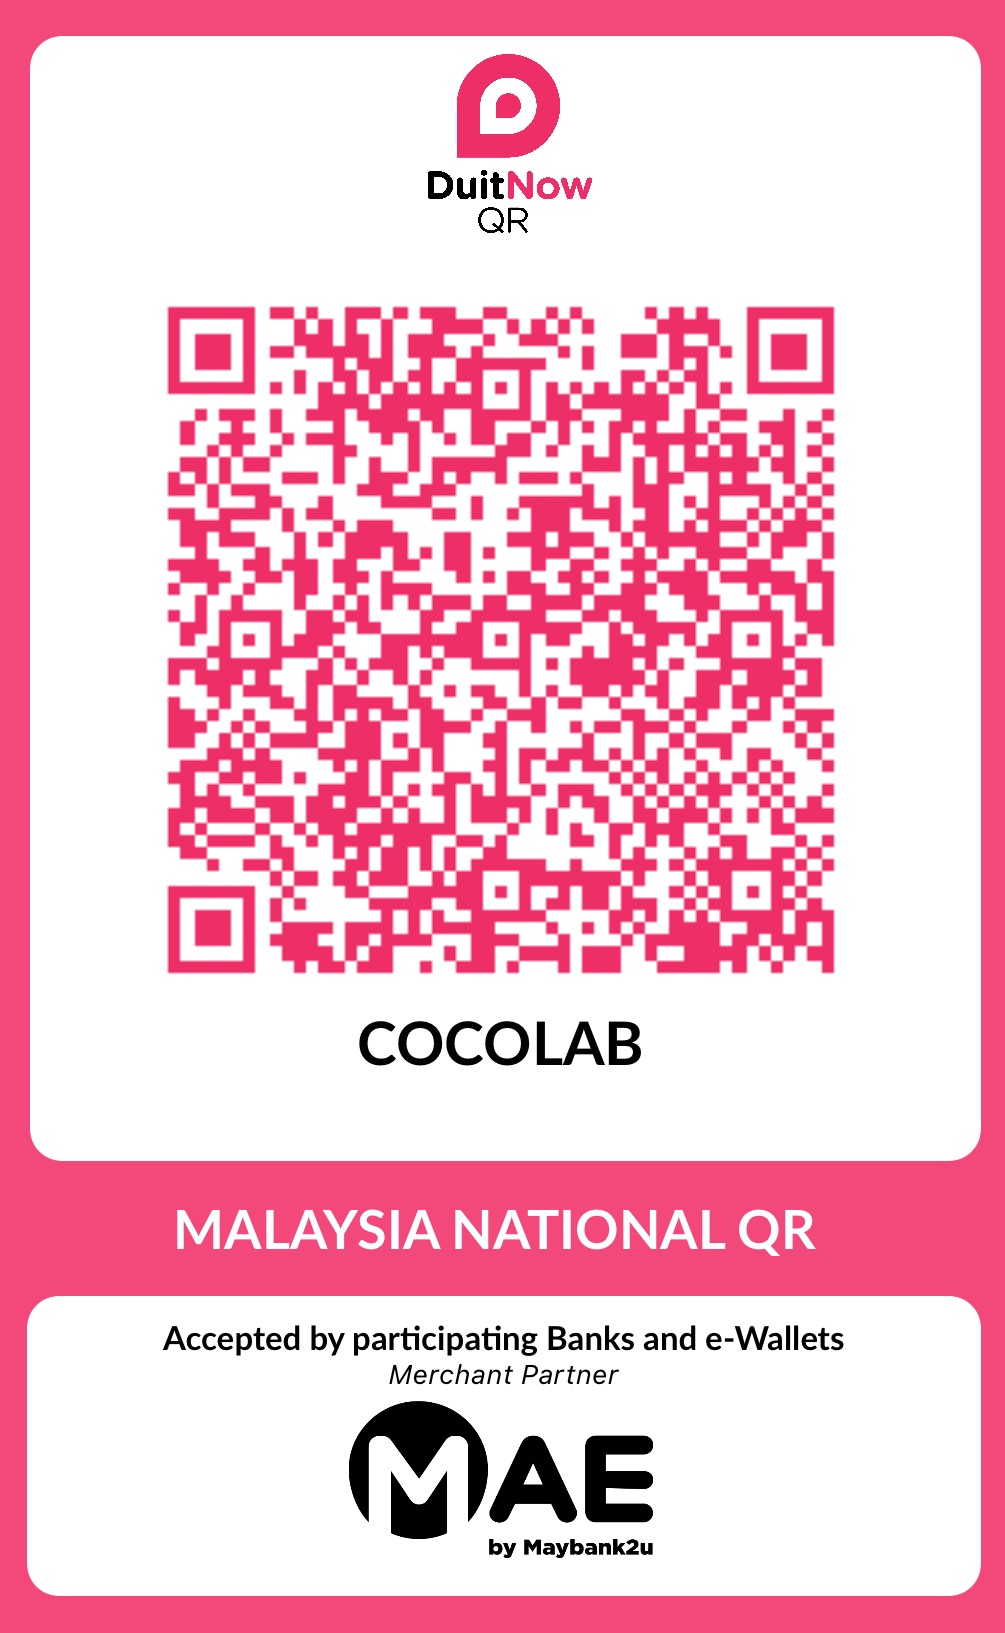 MAE - COCOLAB Central QR Code.jpg